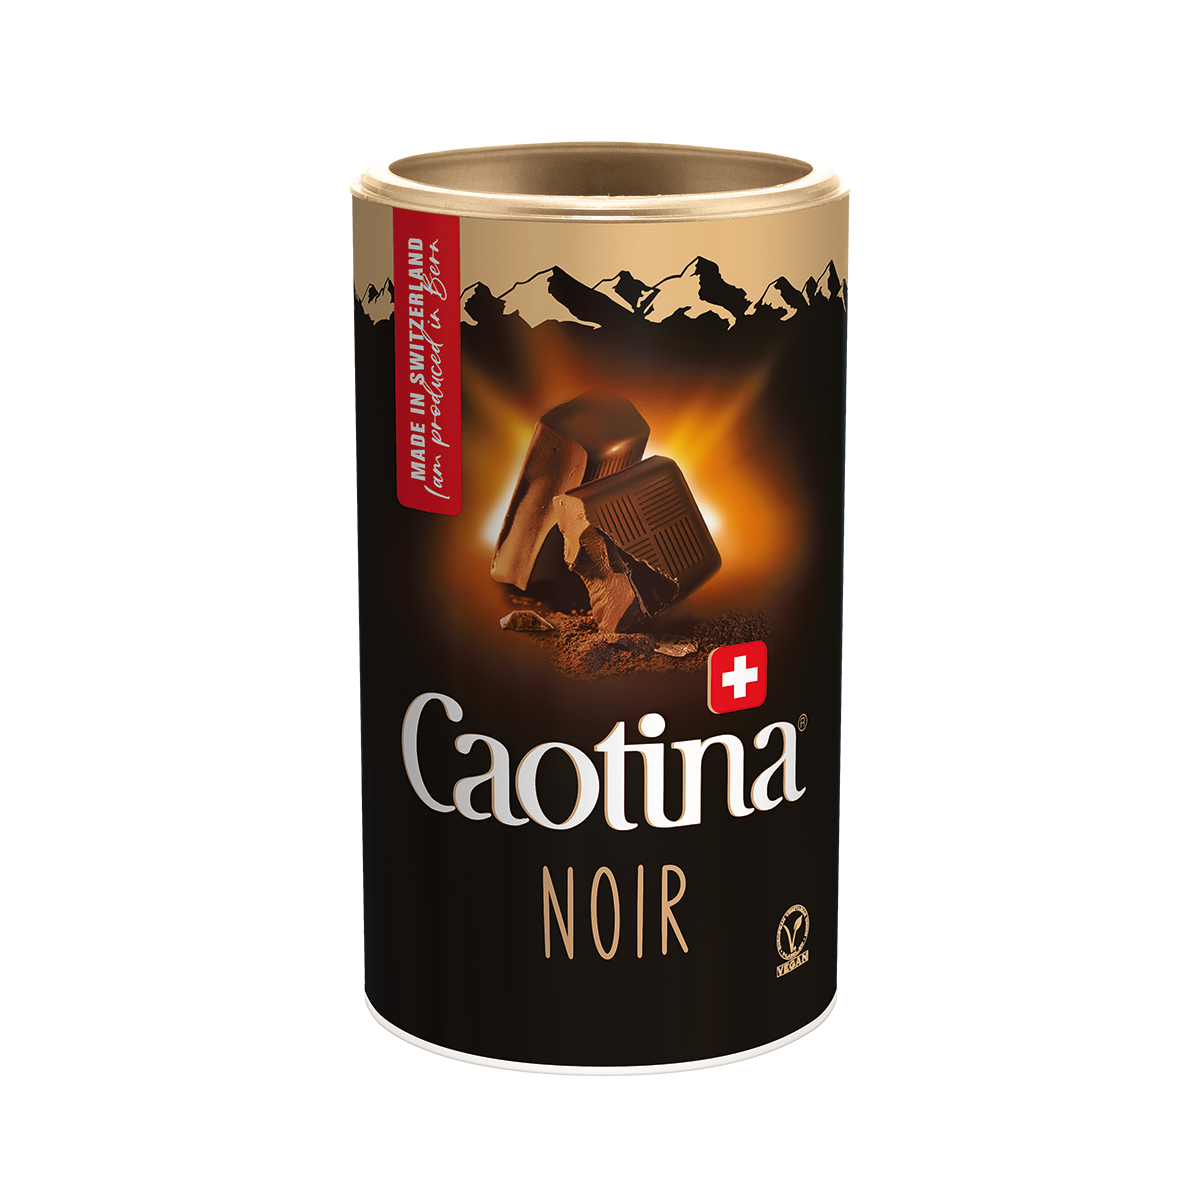  Caotina Noir - die dunkle Trinkschokolade